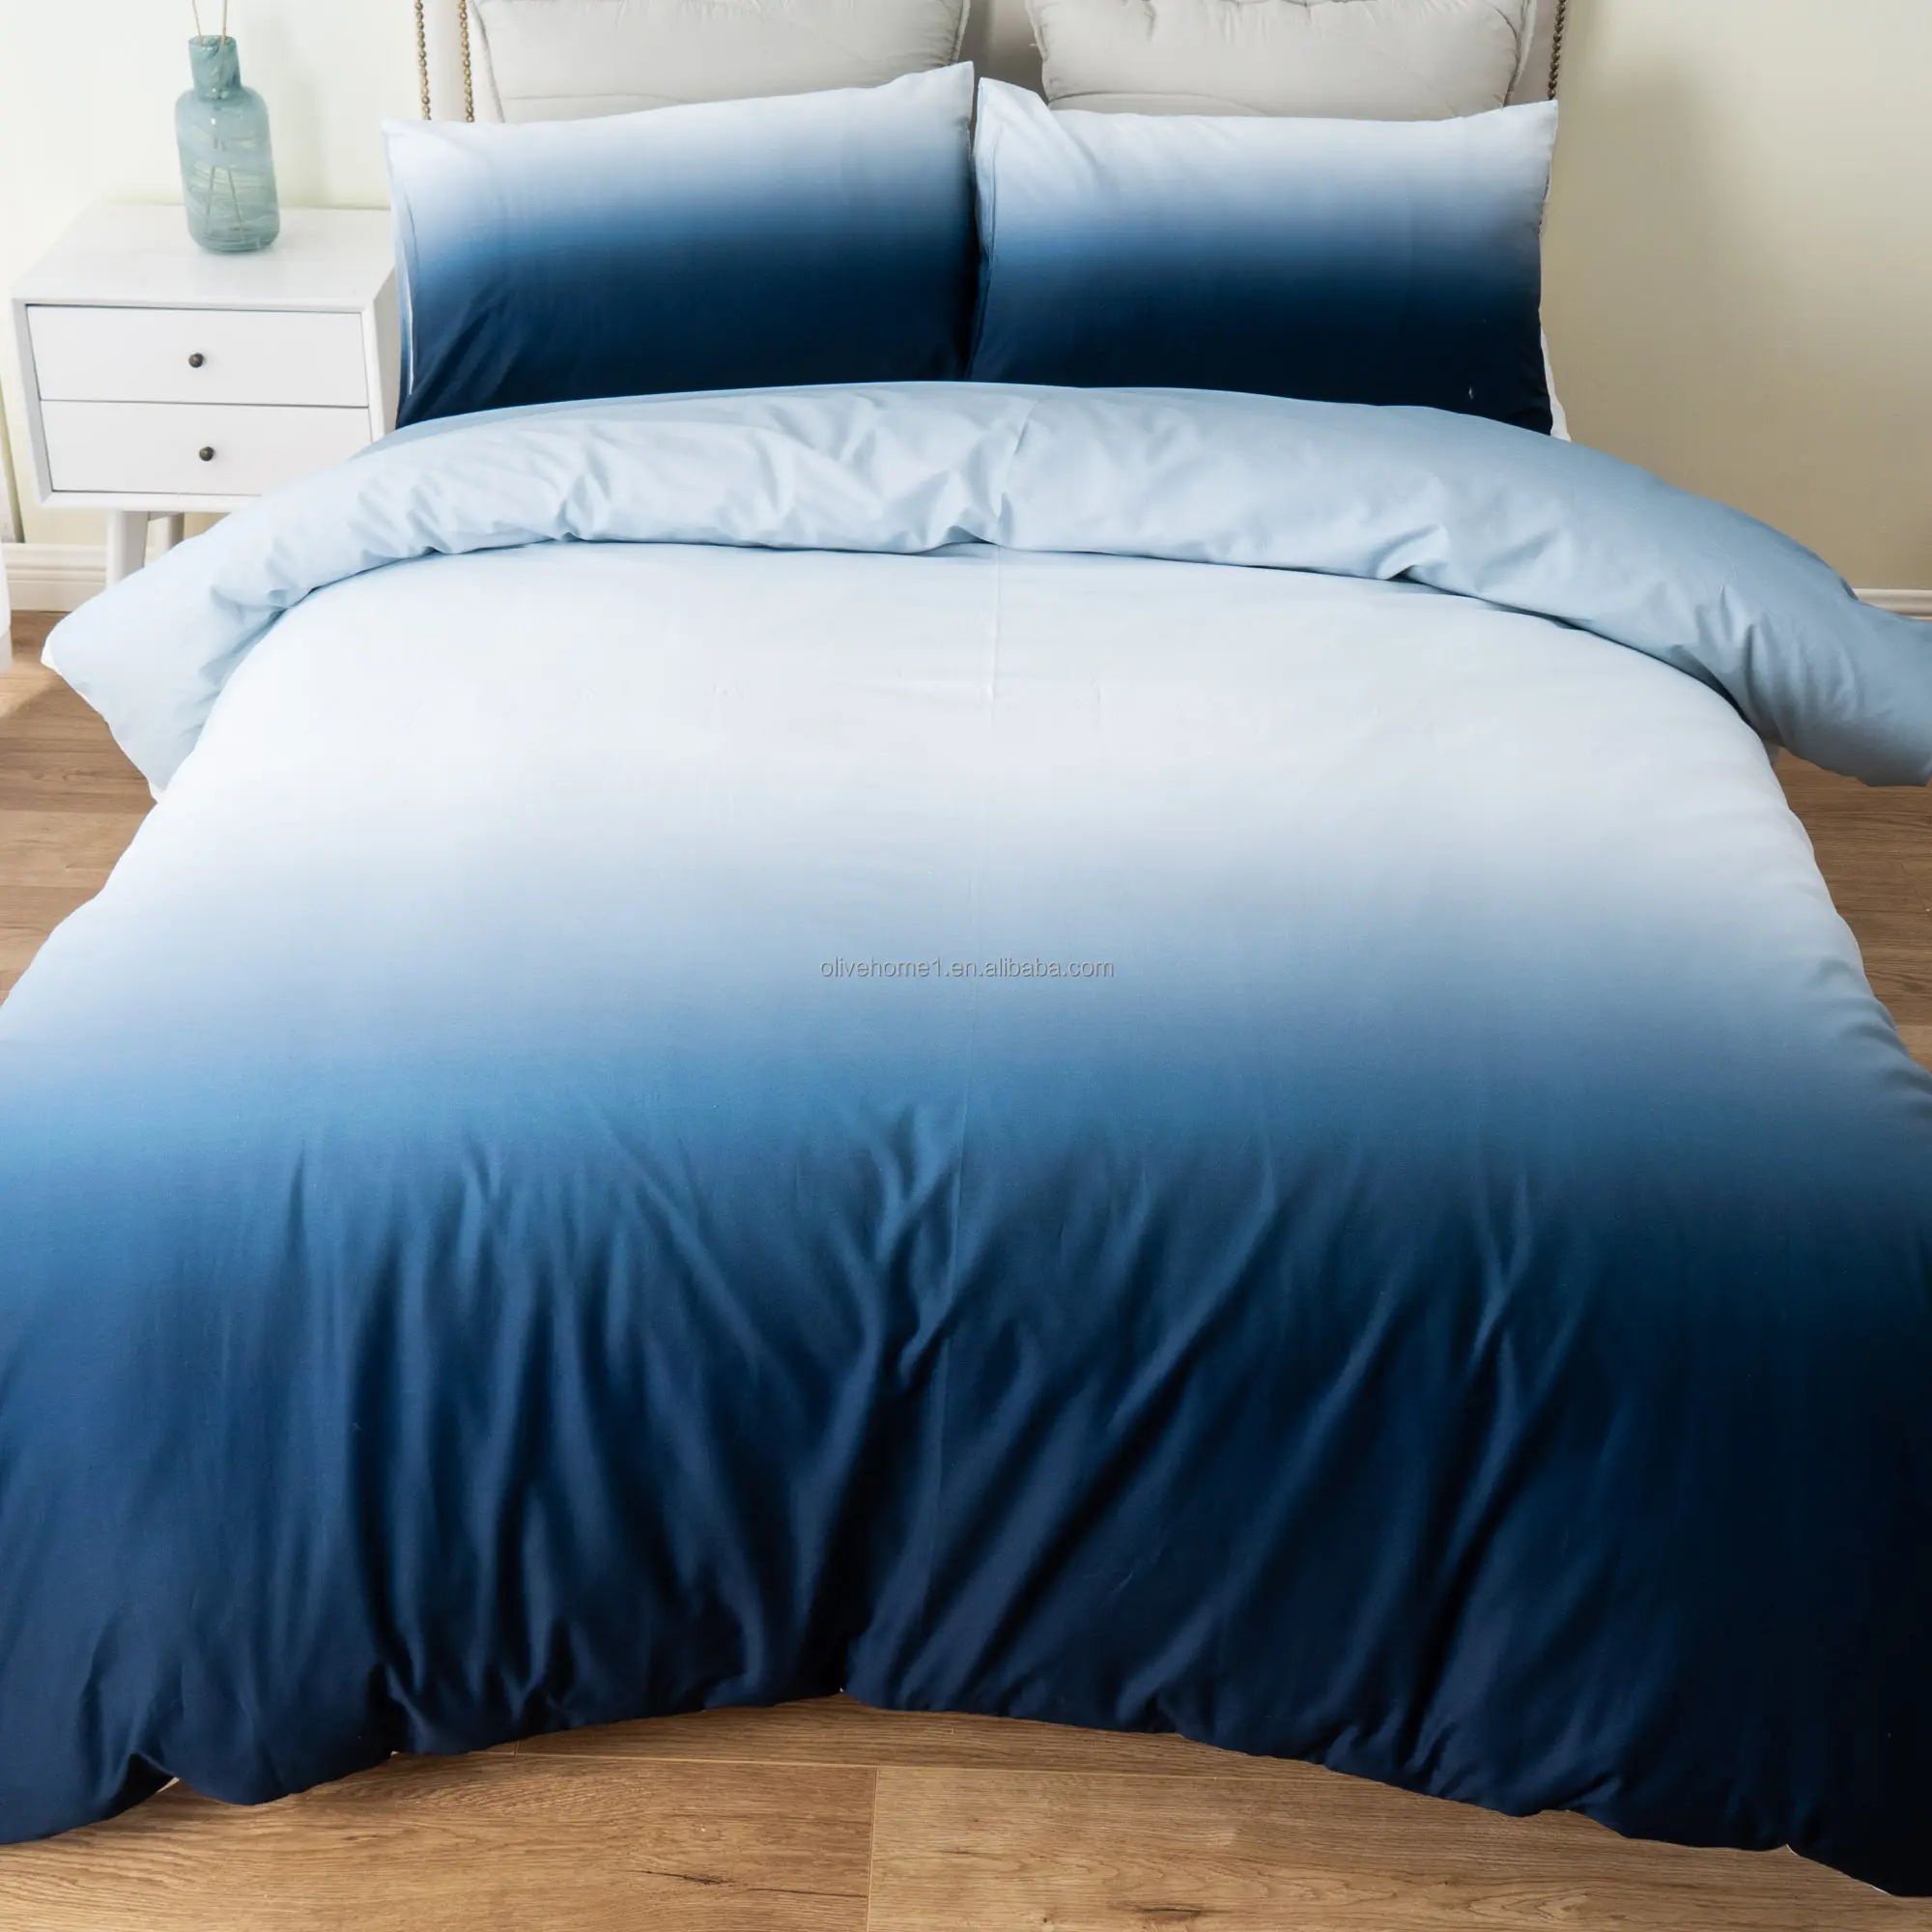 Azul blanco degradado dormitorio 100% algodón edredón funda nórdica edredón colcha juego de cama con 2 uds funda de almohada